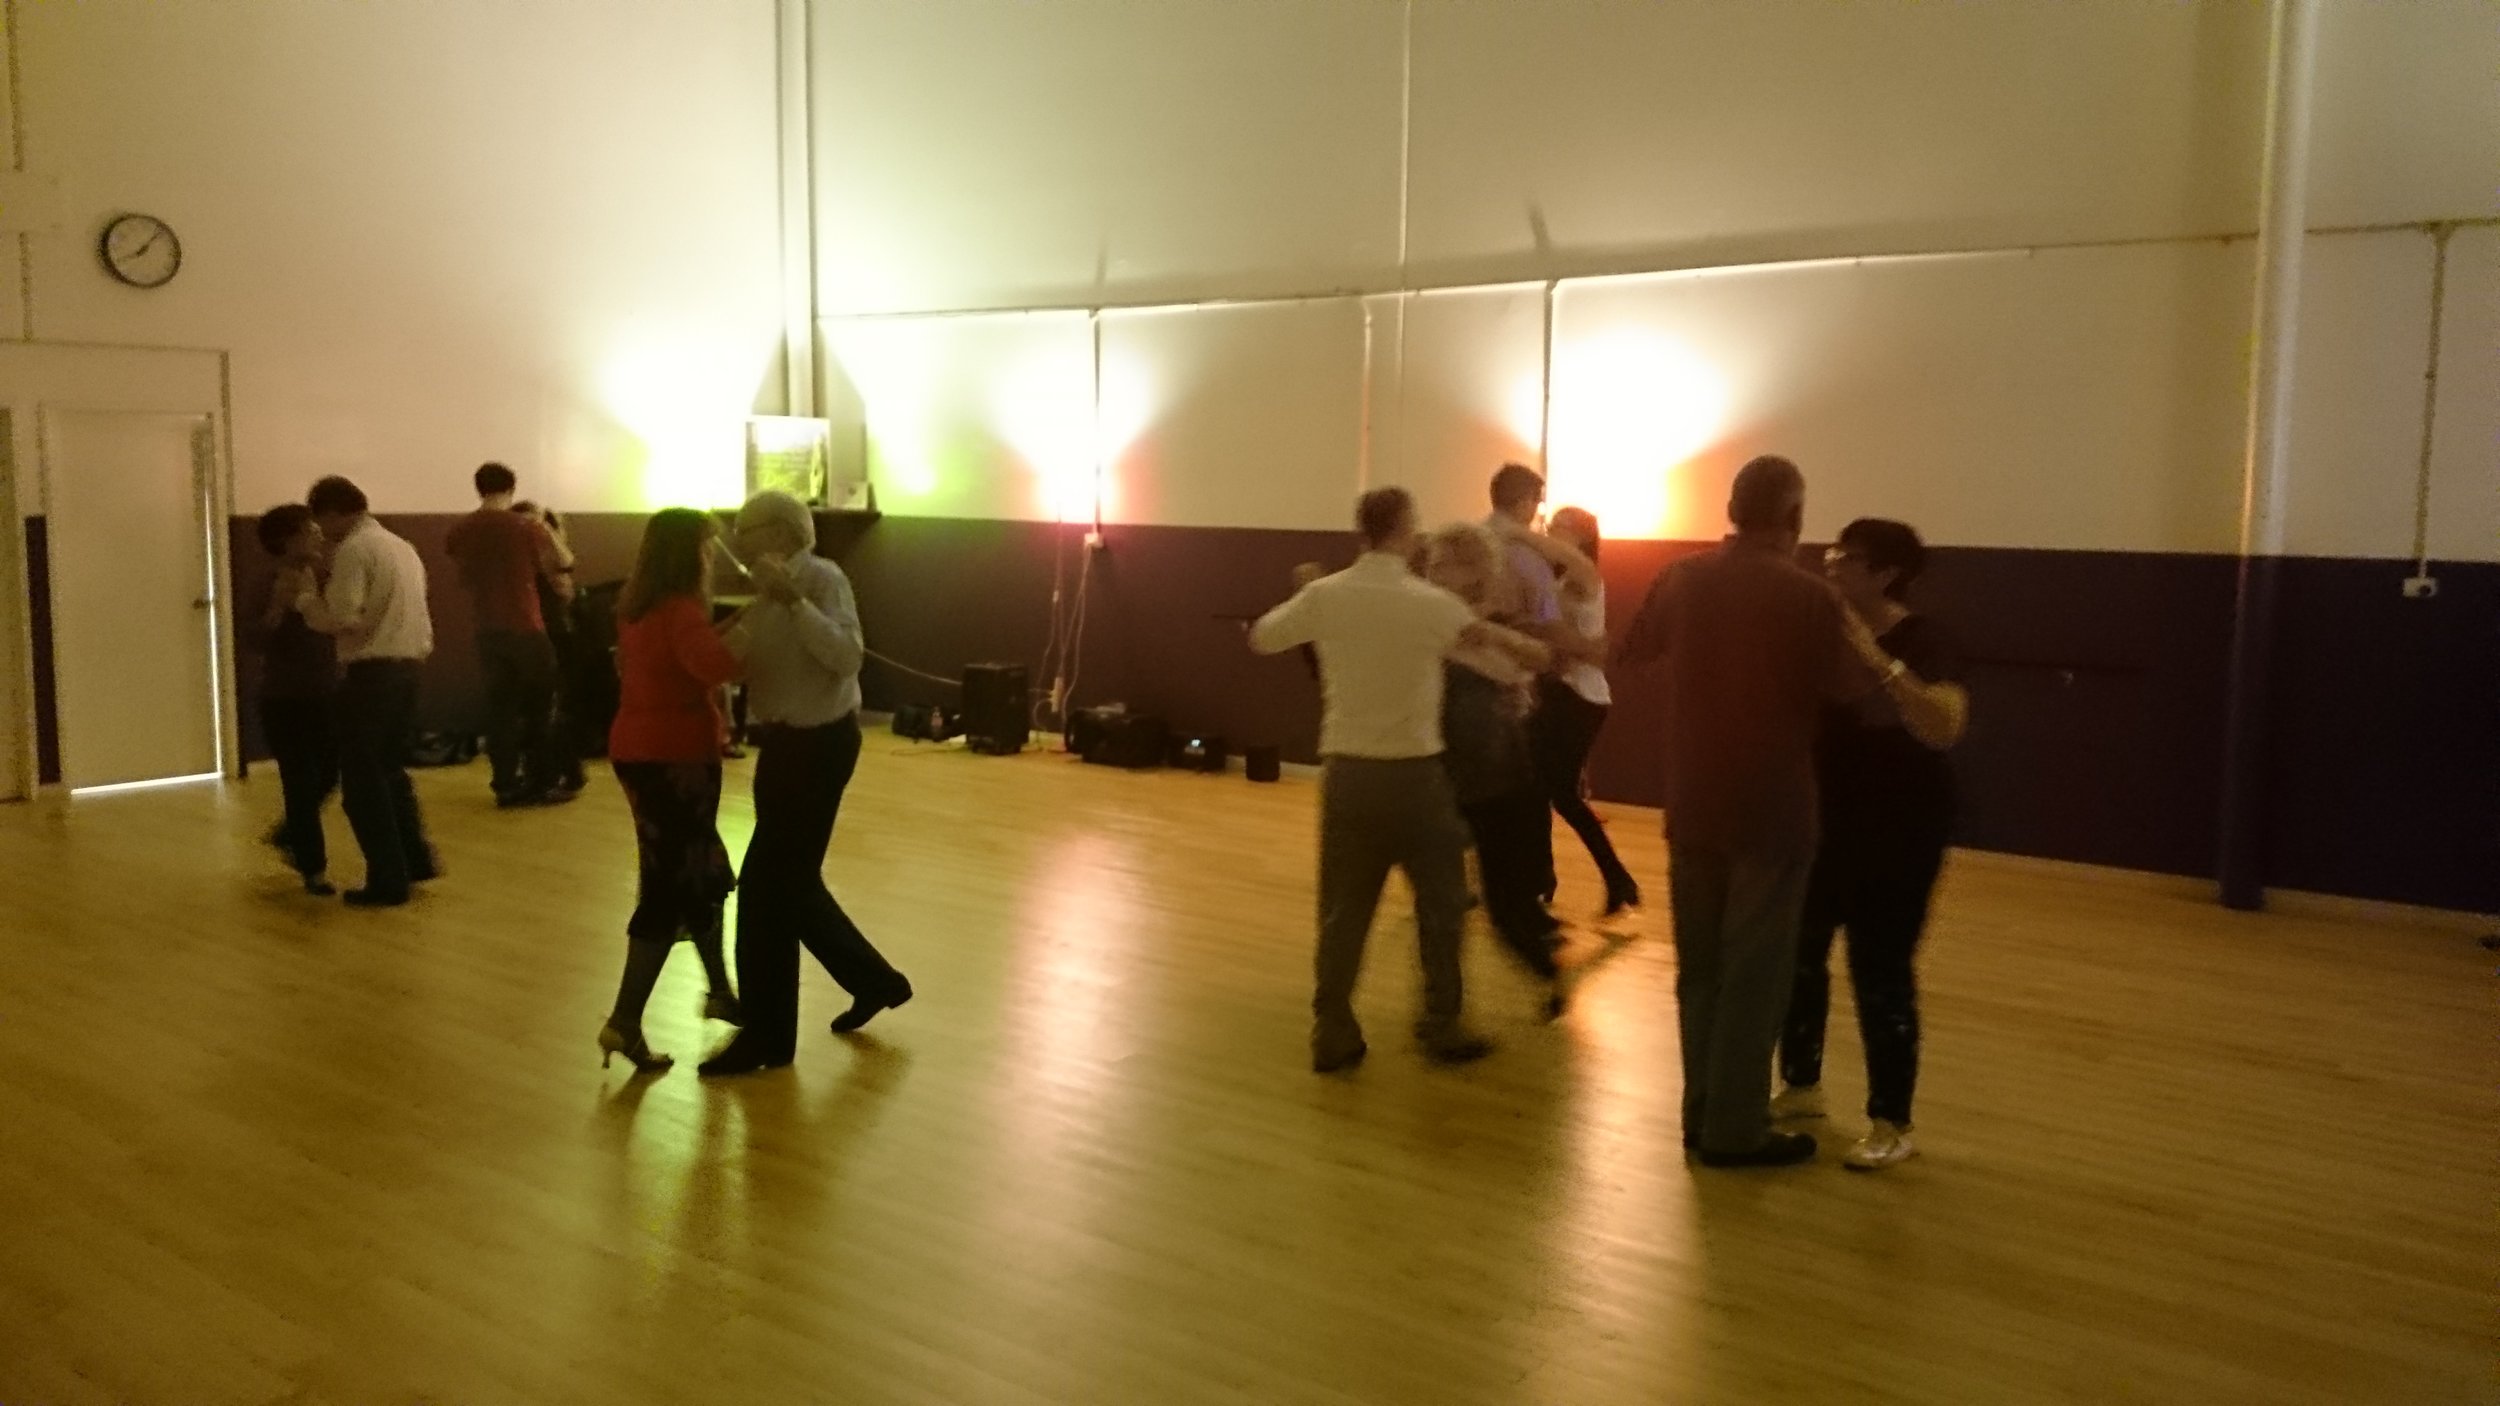 chisholm dance_adult dance classes_wangarra.JPG.JPG